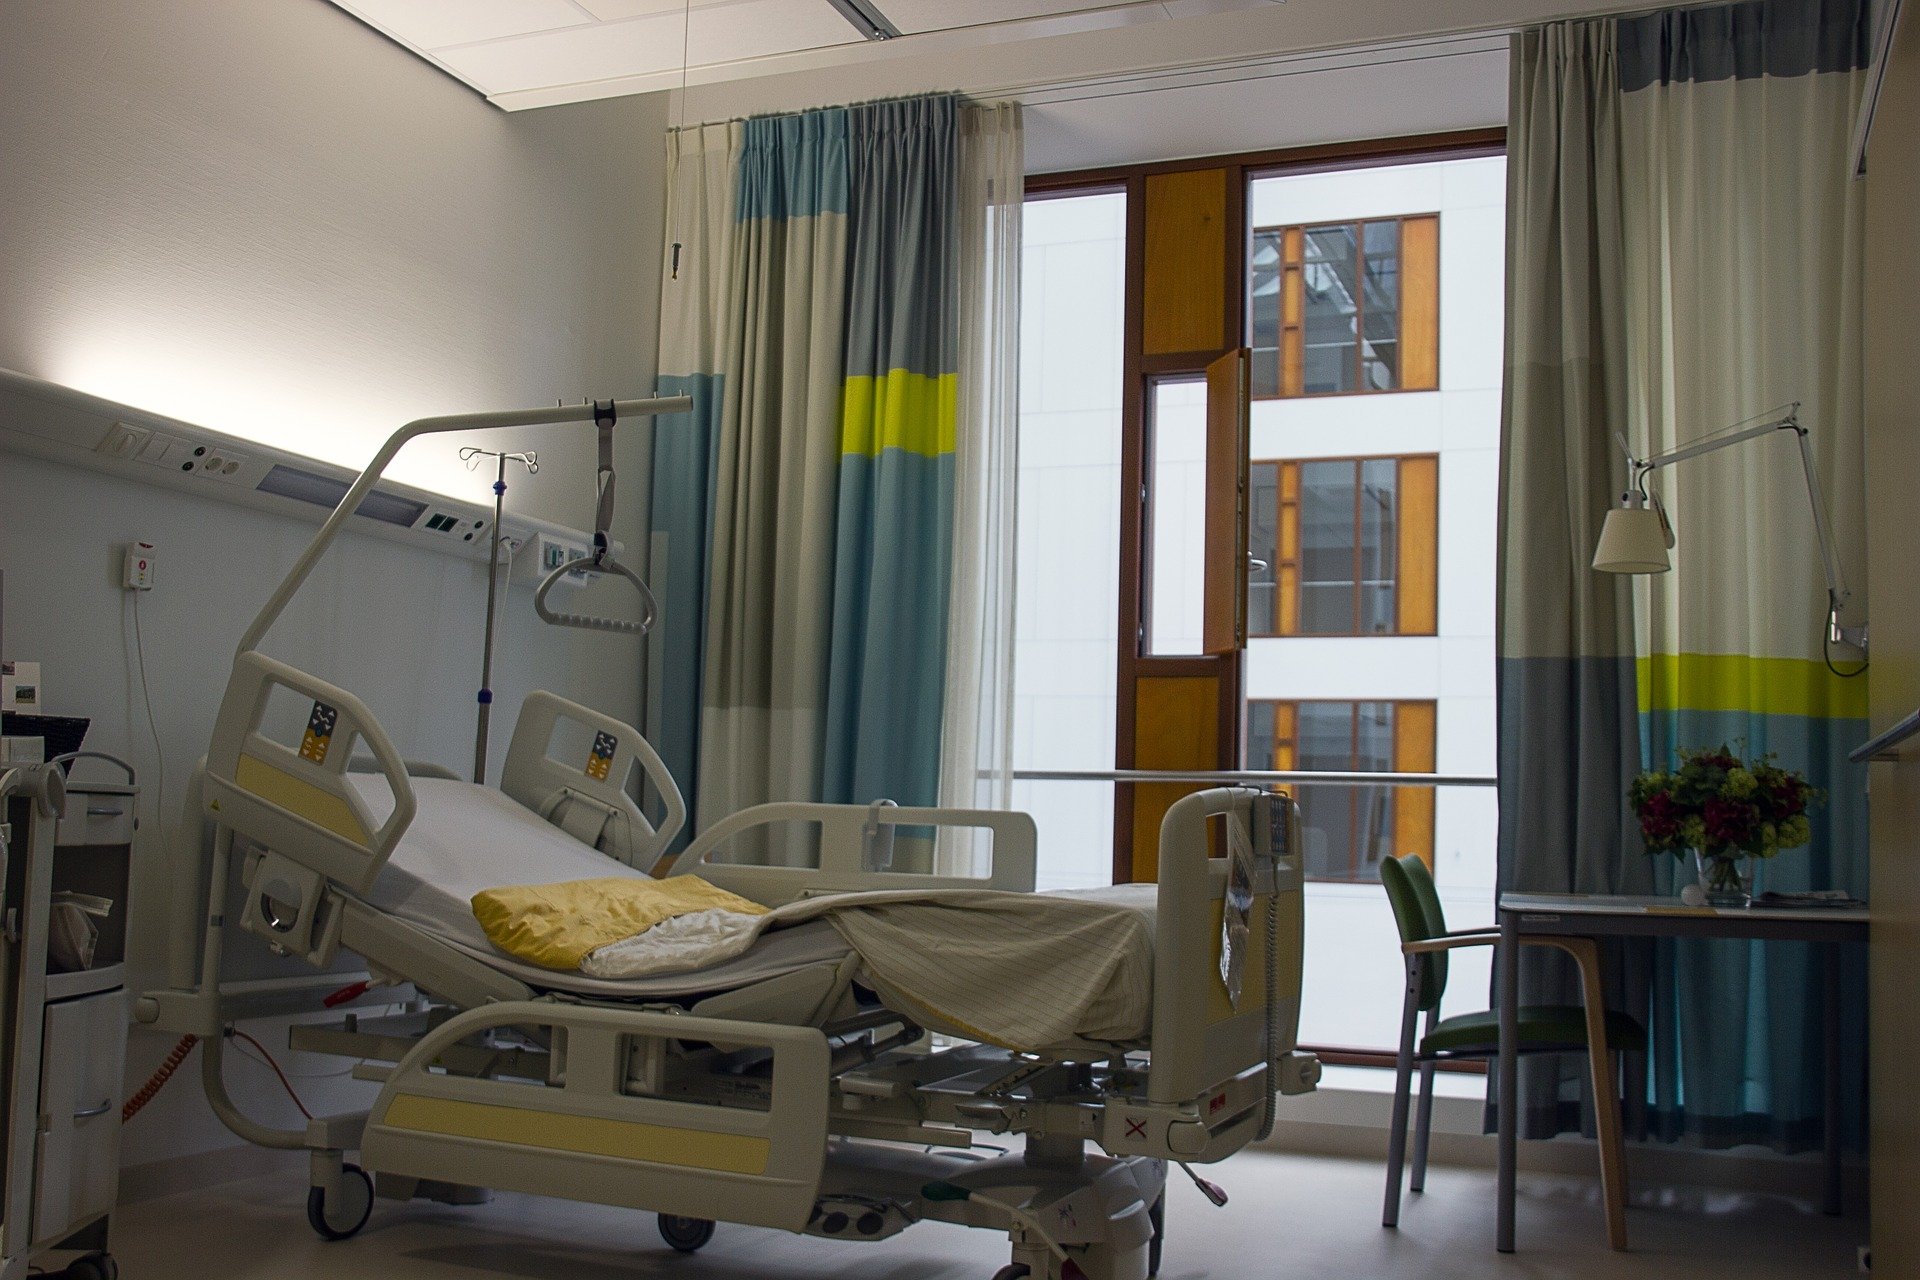 A hospital care room bed | Source: Pixabay